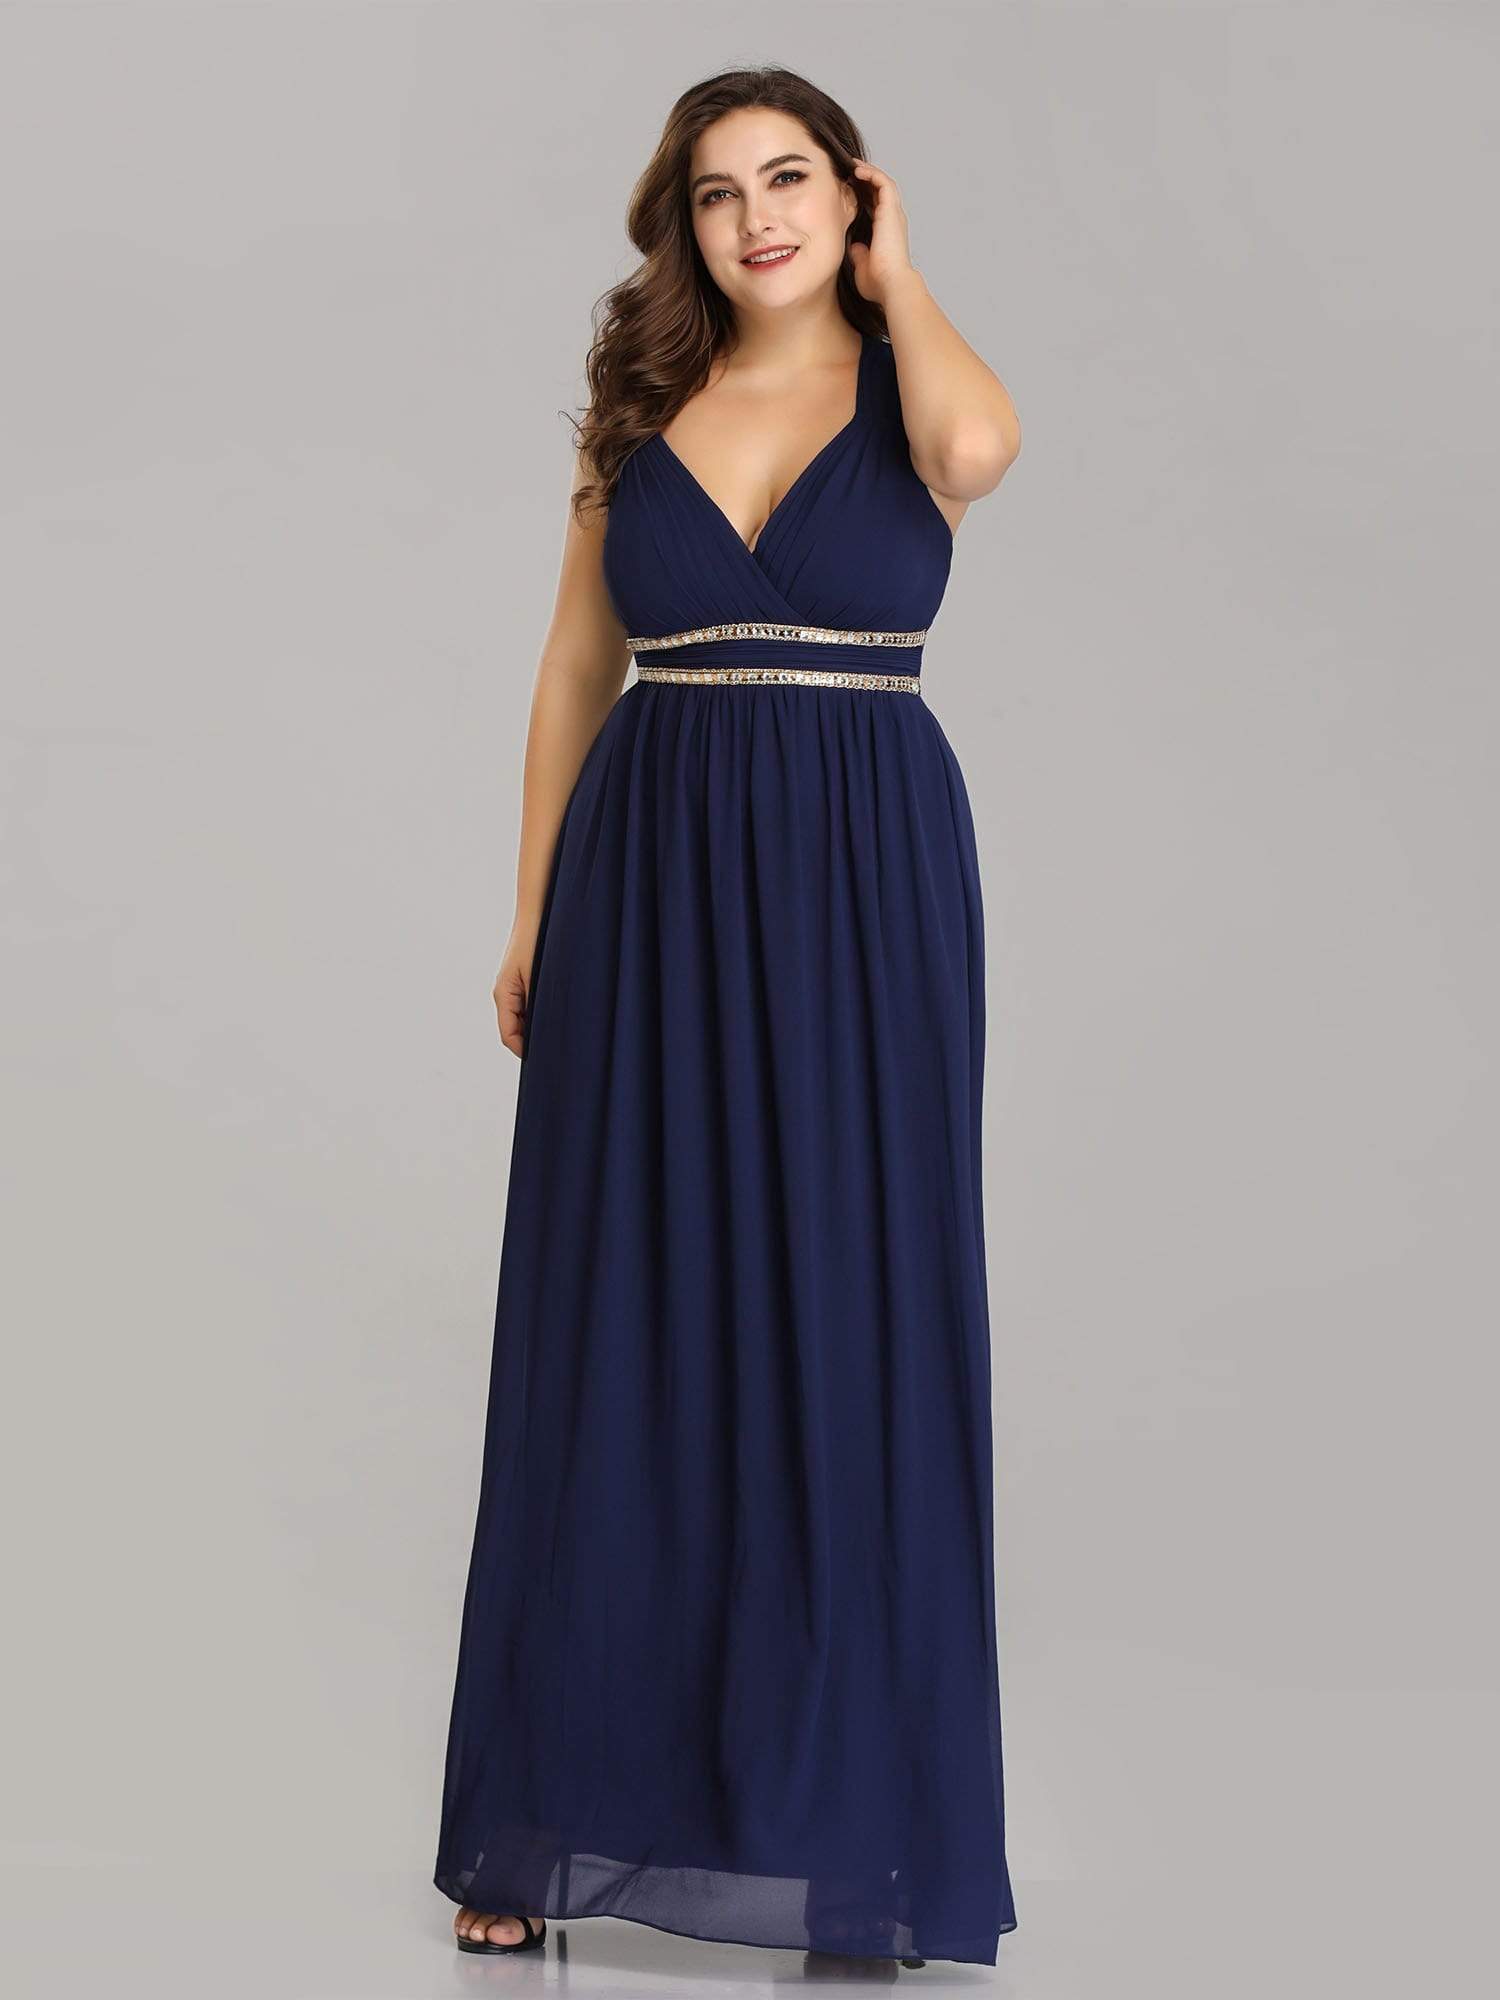 COLOR=Navy Blue | Sleeveless Grecian Style Evening Dress-Navy Blue 7